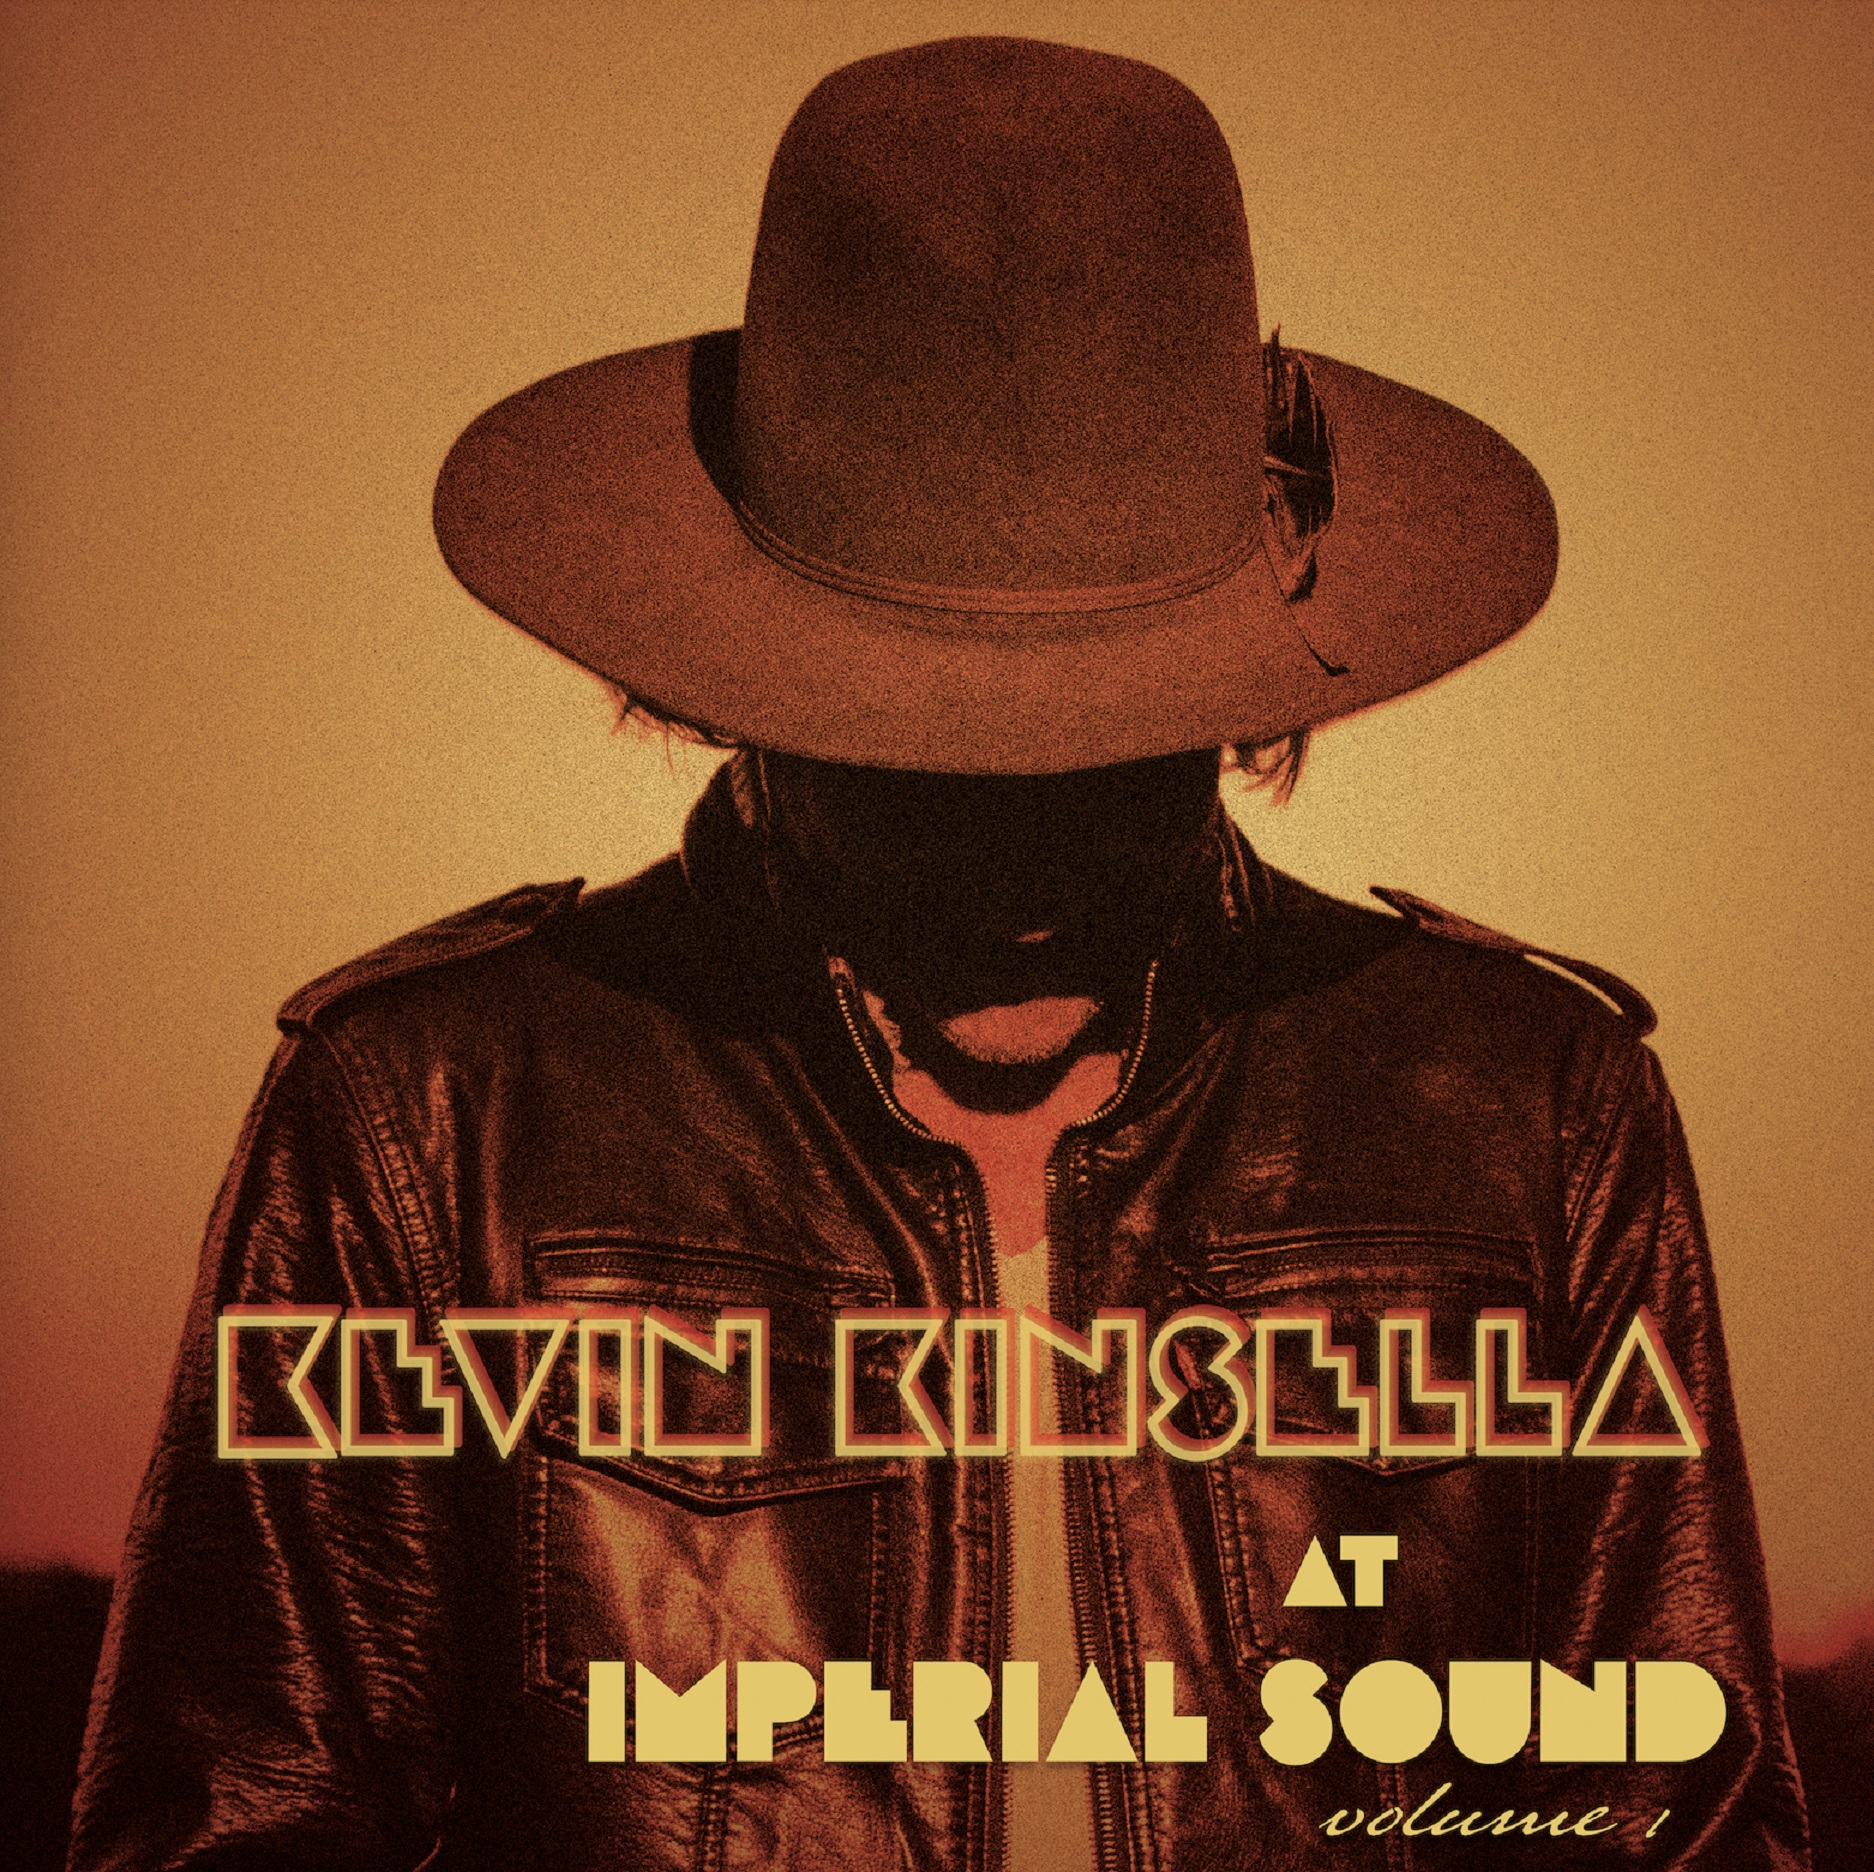 American Reggae Pioneer Kevin Kinsella Releases New Album   ‘At Imperial Sound, Volume 1’ via Regime Music Group